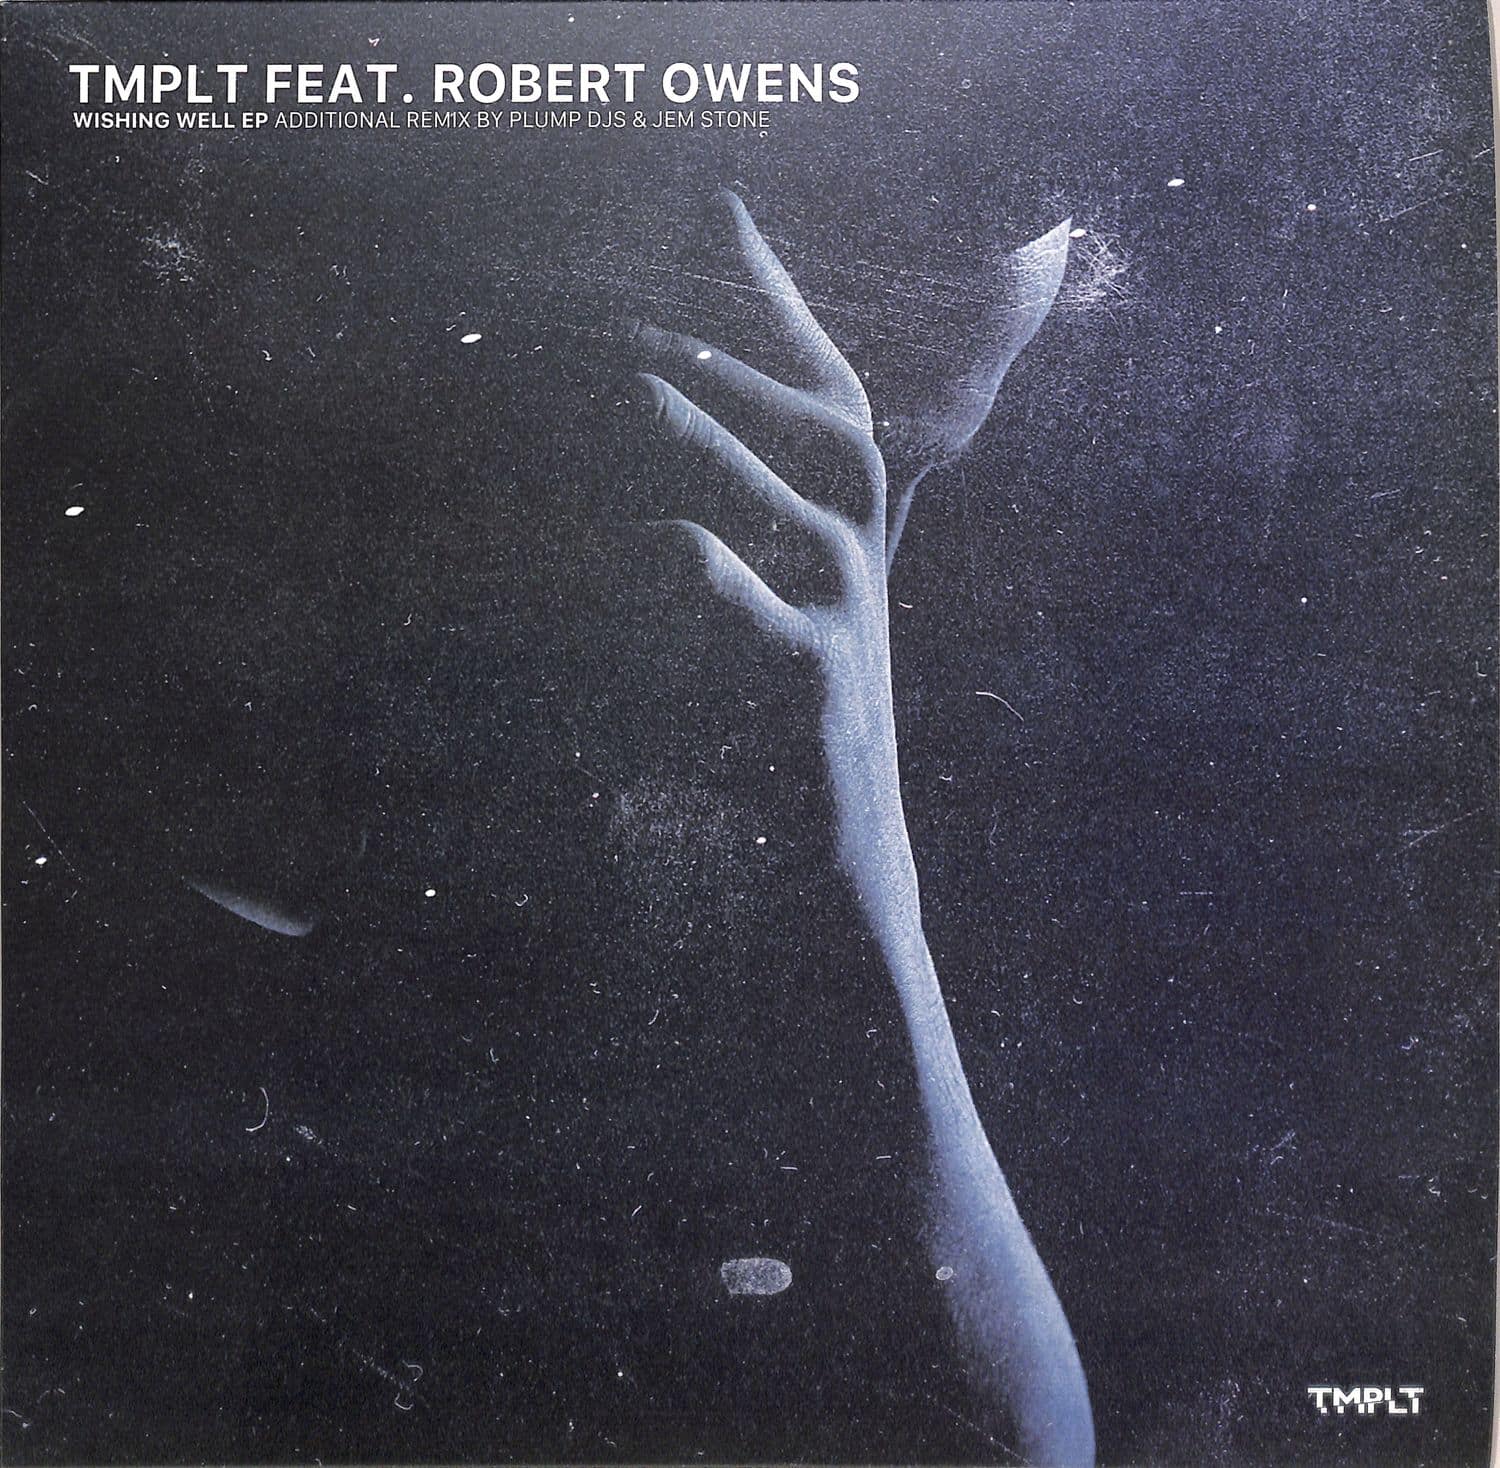 TMPLT FEAT. ROBERT OWENS - WISHING WELL 